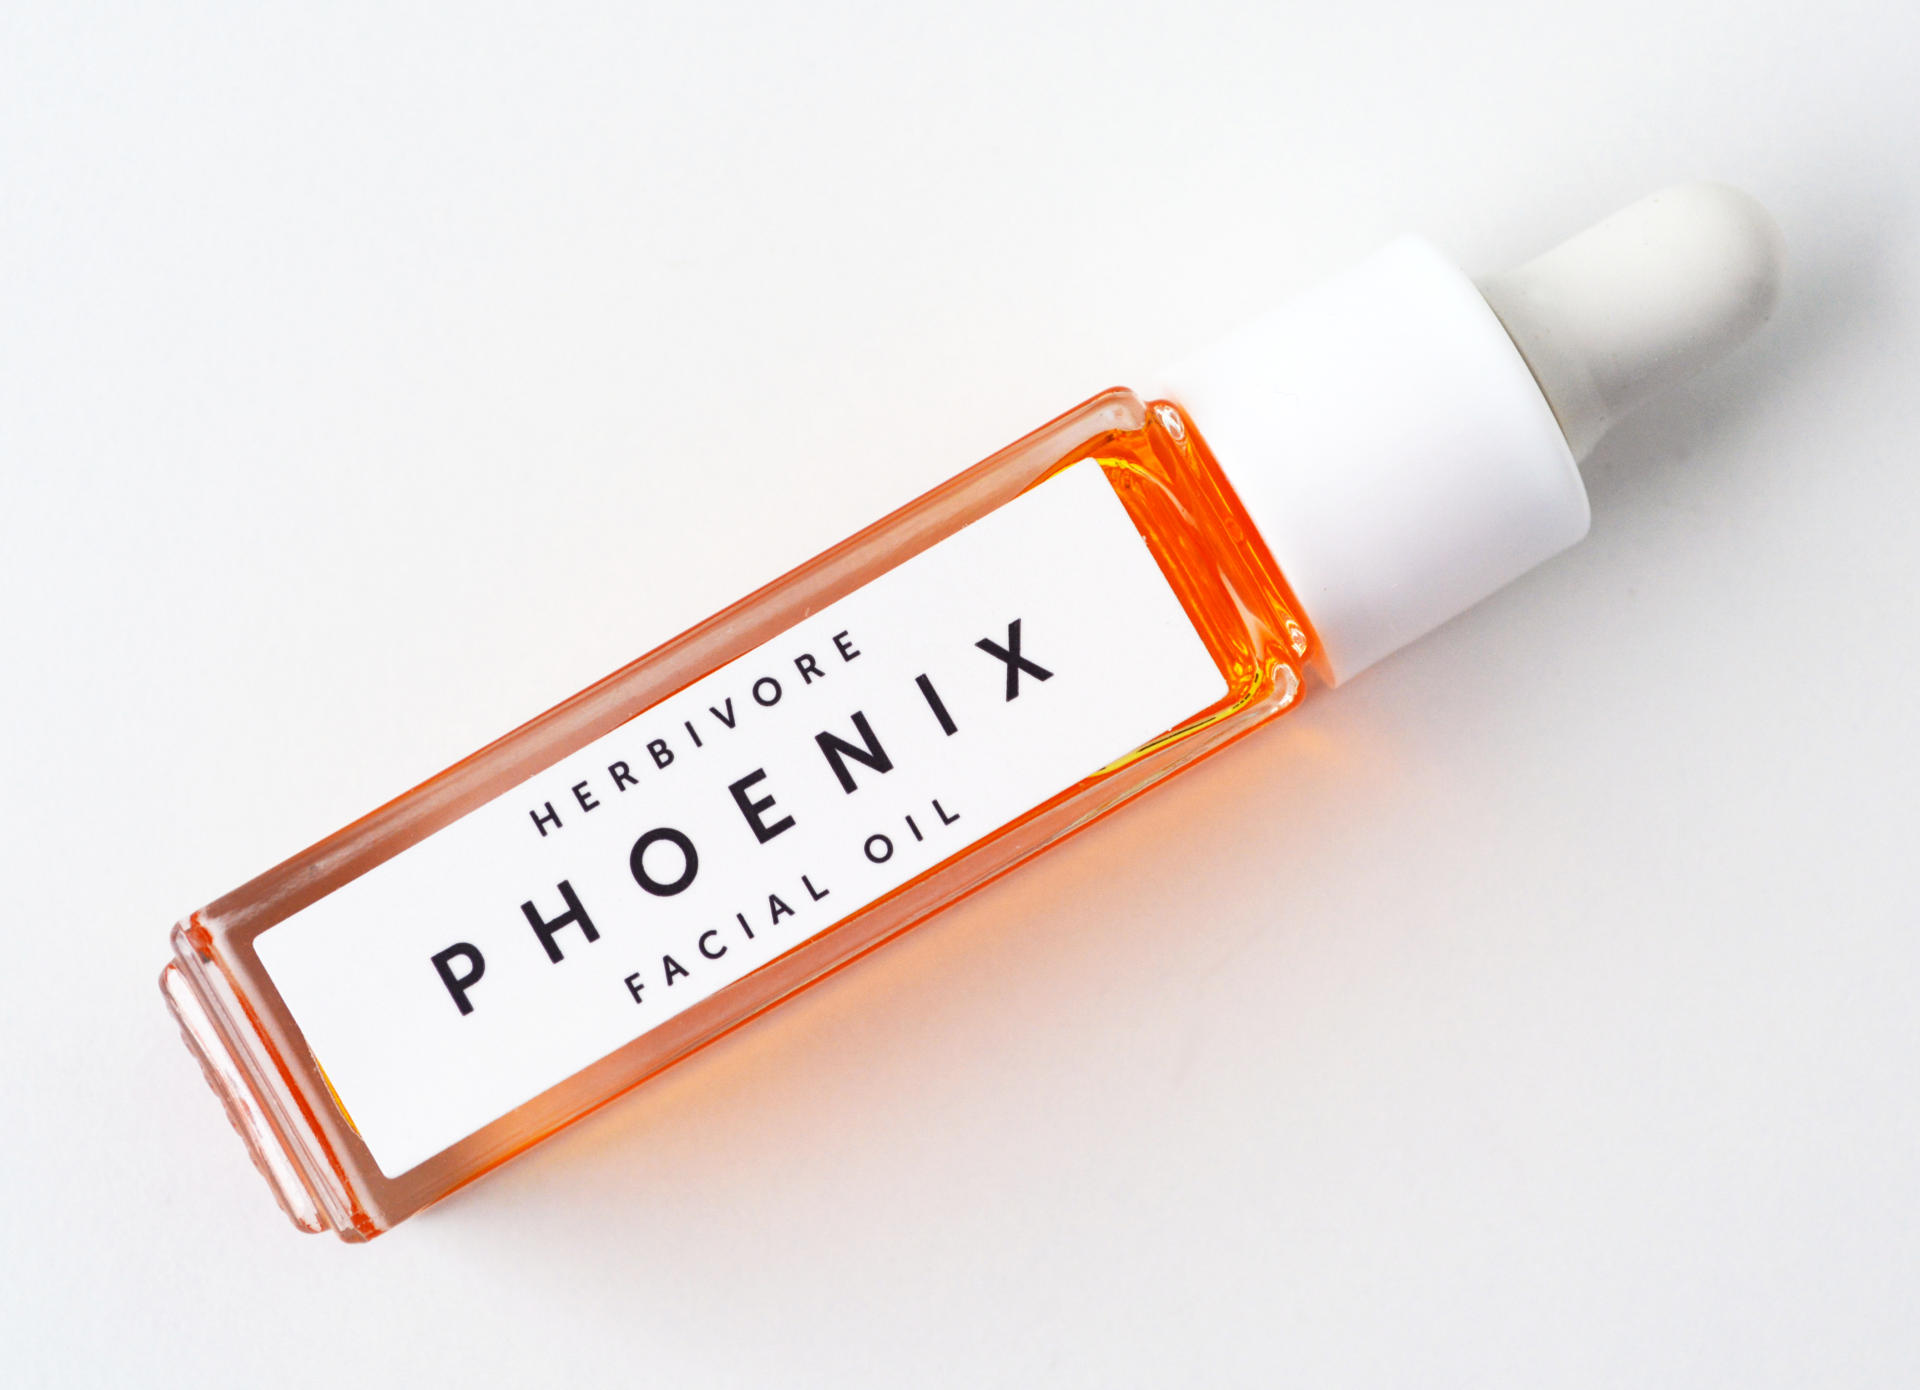 Herbivore Phoenix Facial Oil